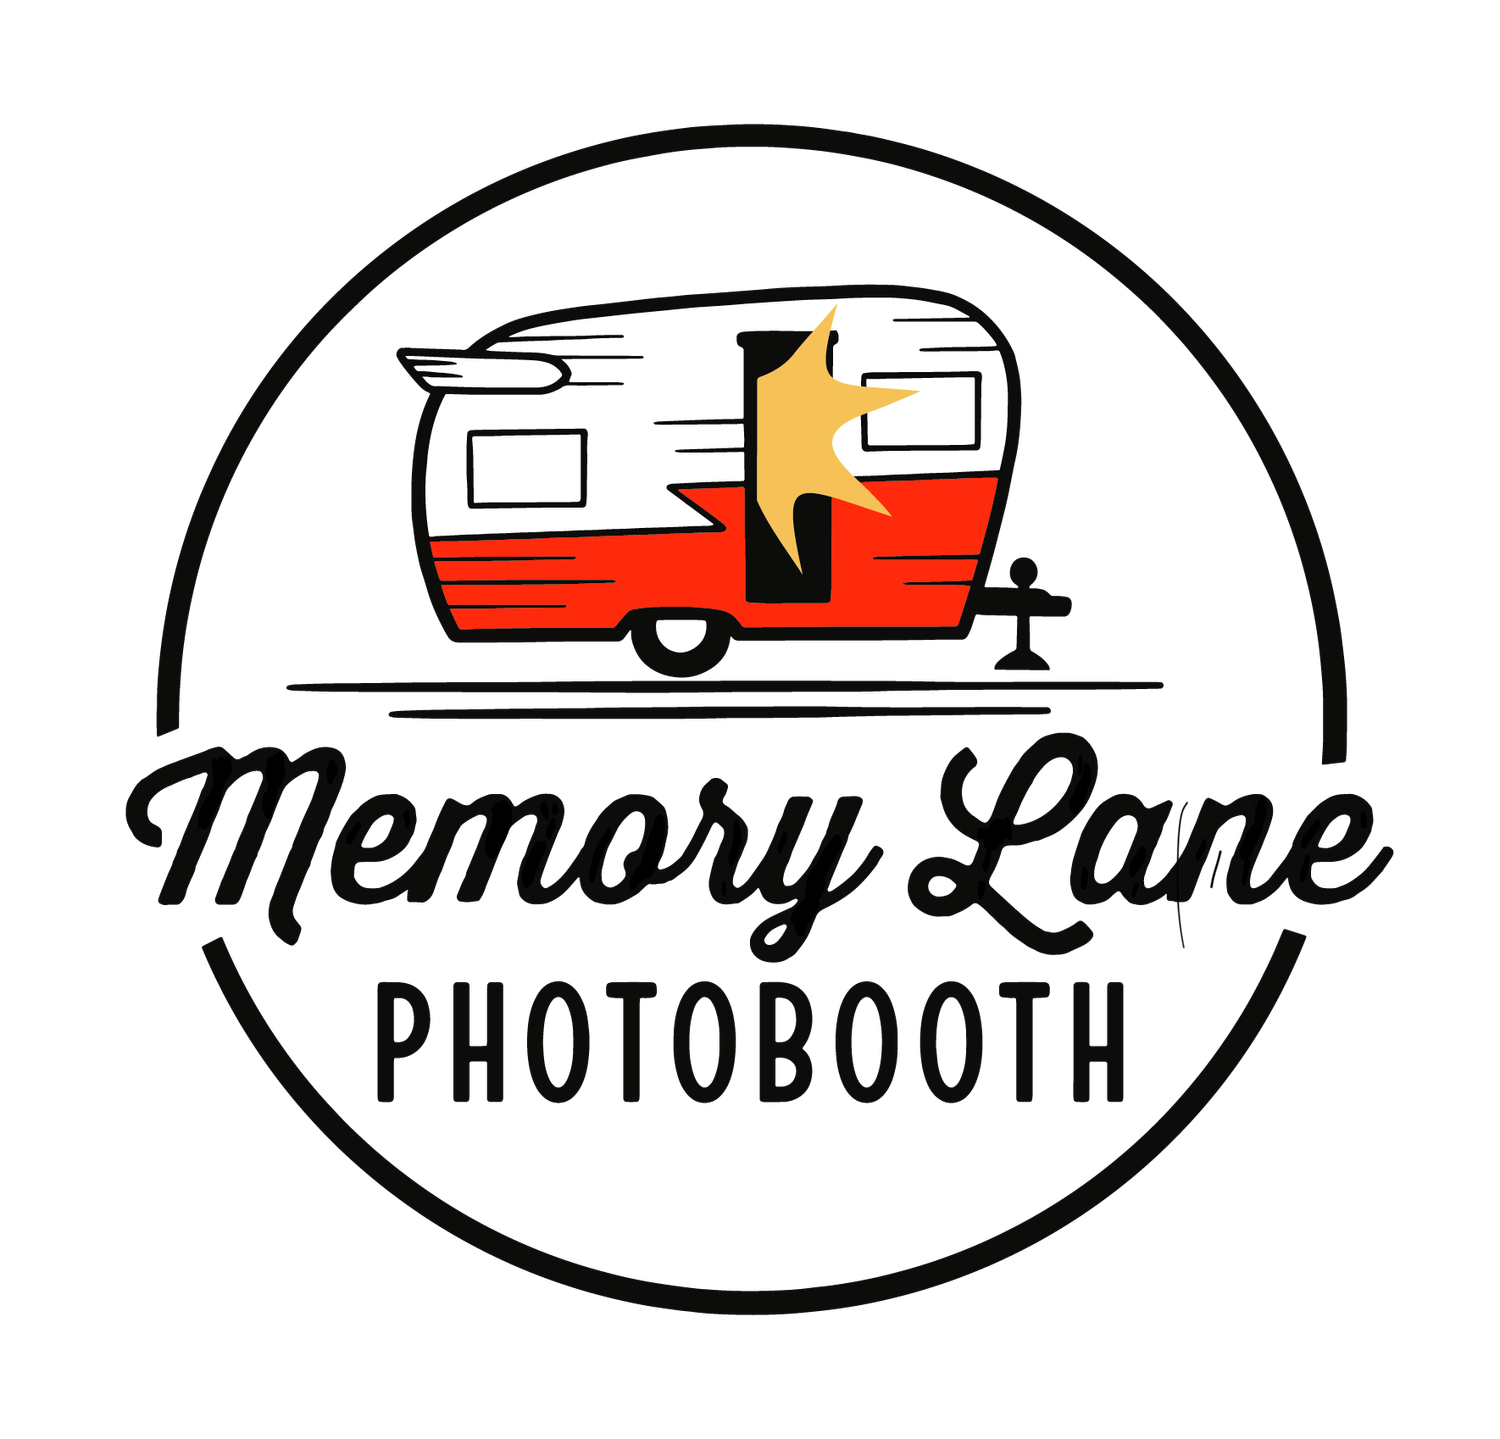 Memory Lane Photobooth, LLC